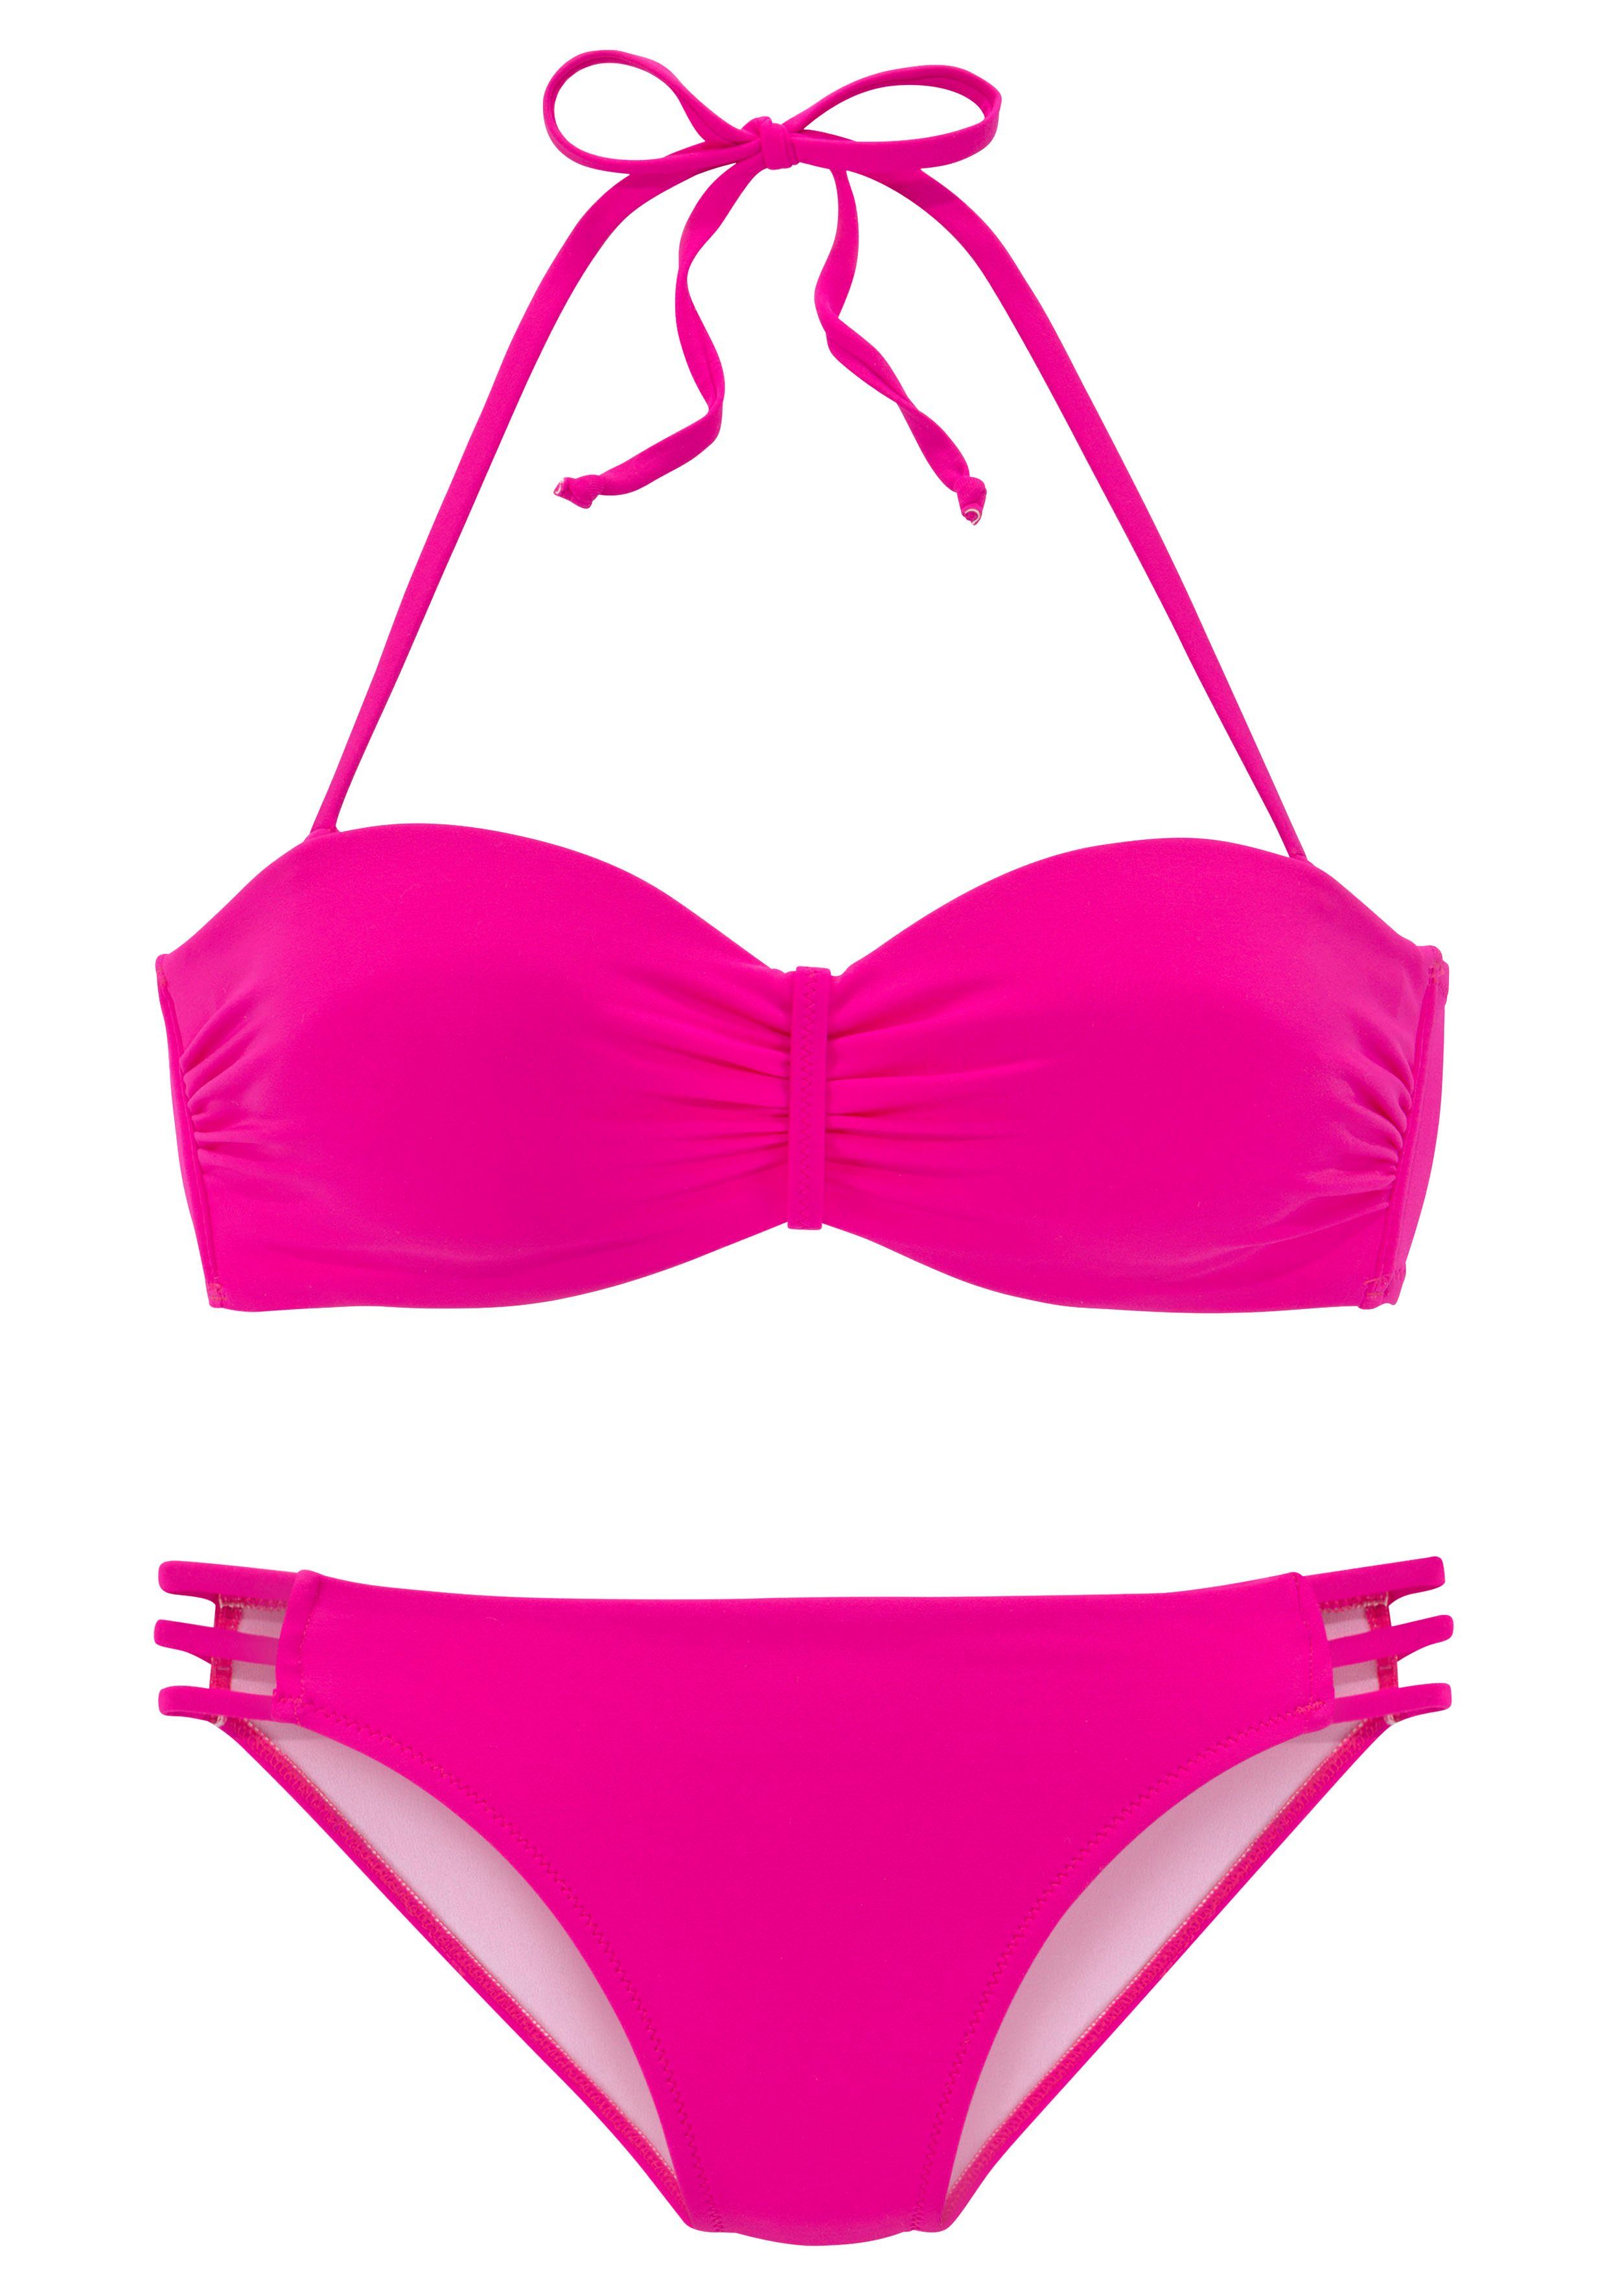 Vivance Bügel-Bandeau-Bikini in trendiger Unifarbe pink | Neckholder-Bikinis